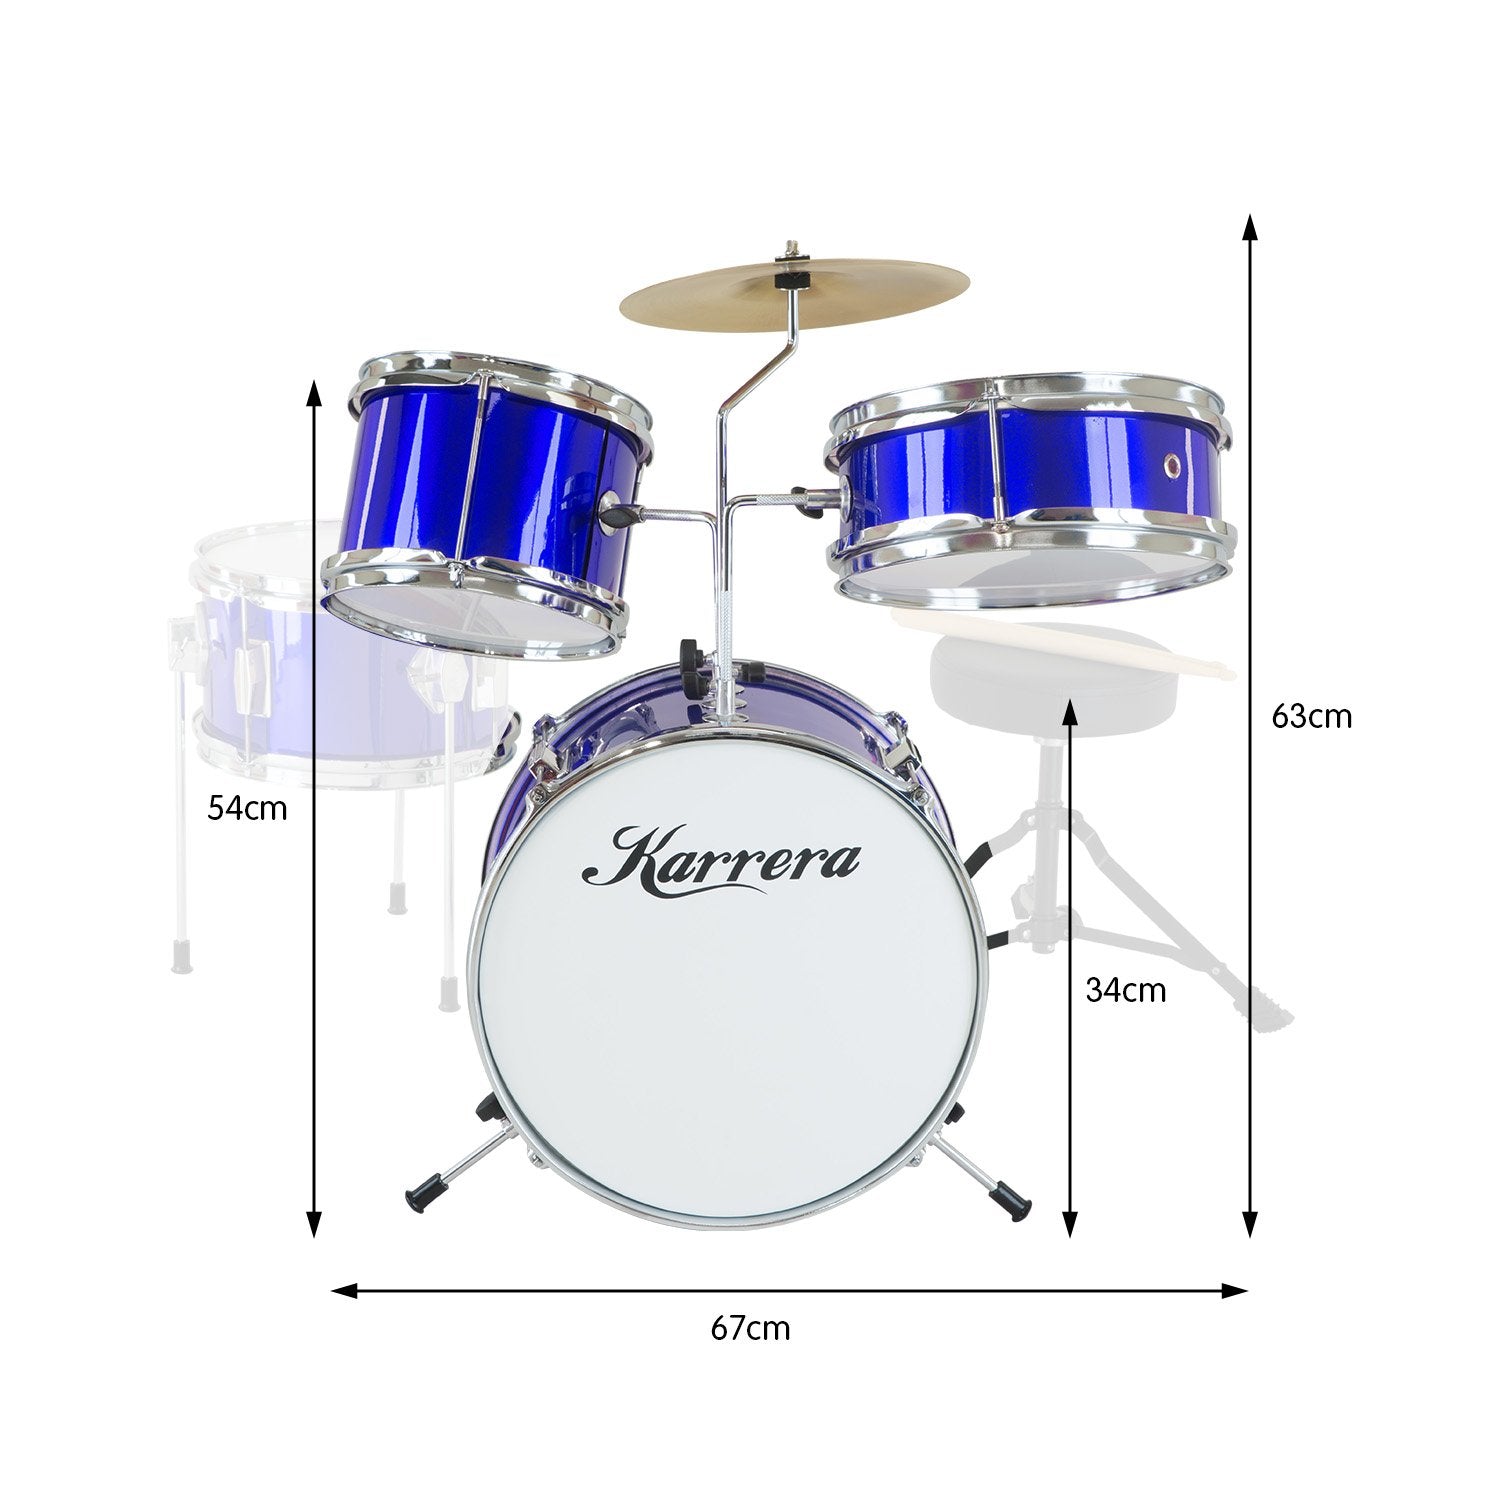 Karrera Children's 4pc Drum Kit - Blue - 0